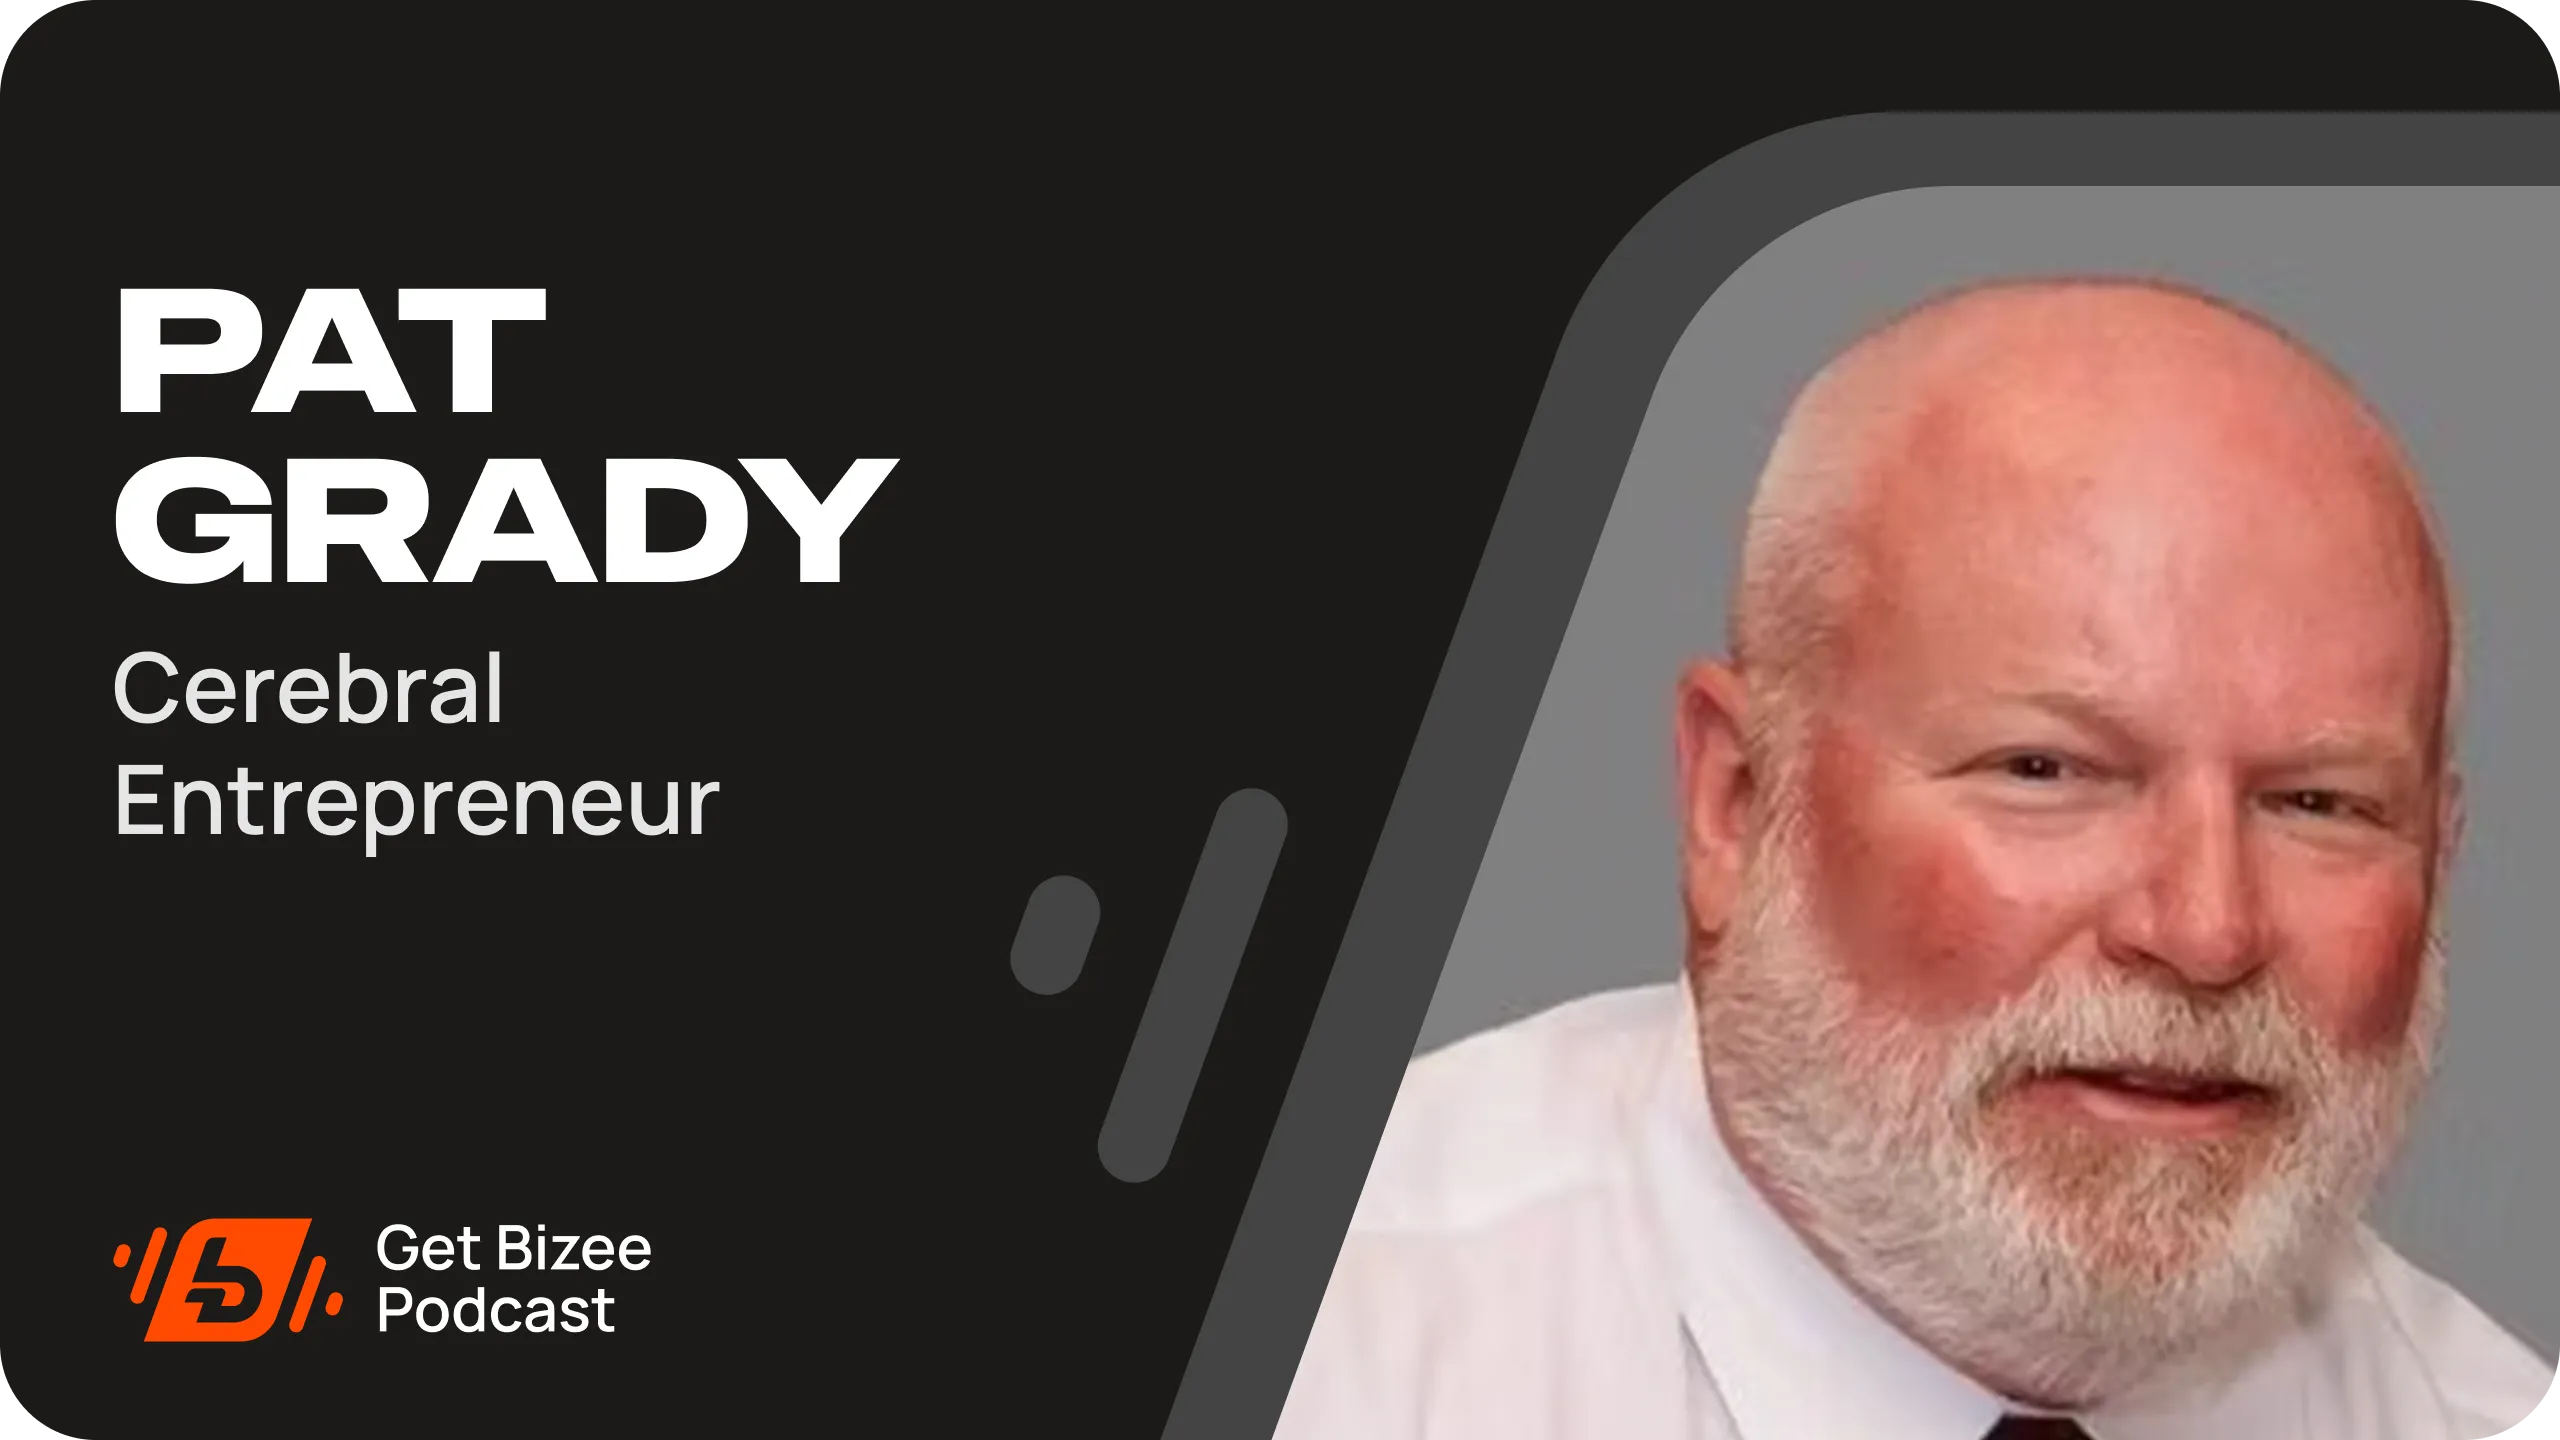 Podcast Guest Video - Pat Grady